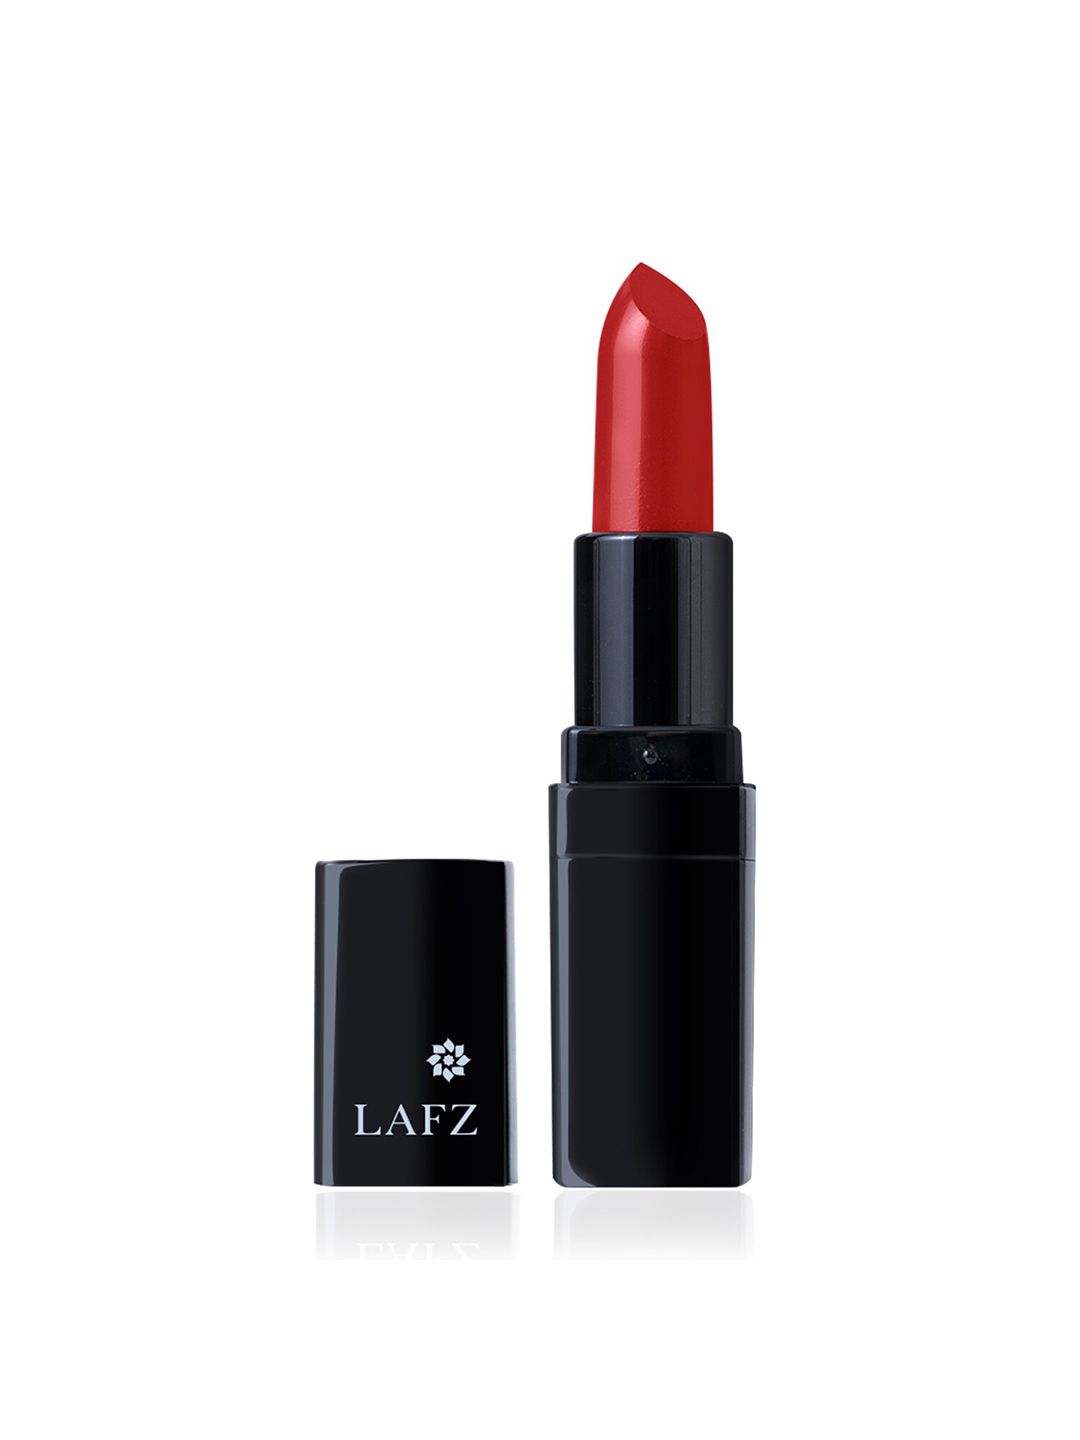 LAFZ Velvet Matte Bullet Lipstick - Vintage Red 4.5g Price in India